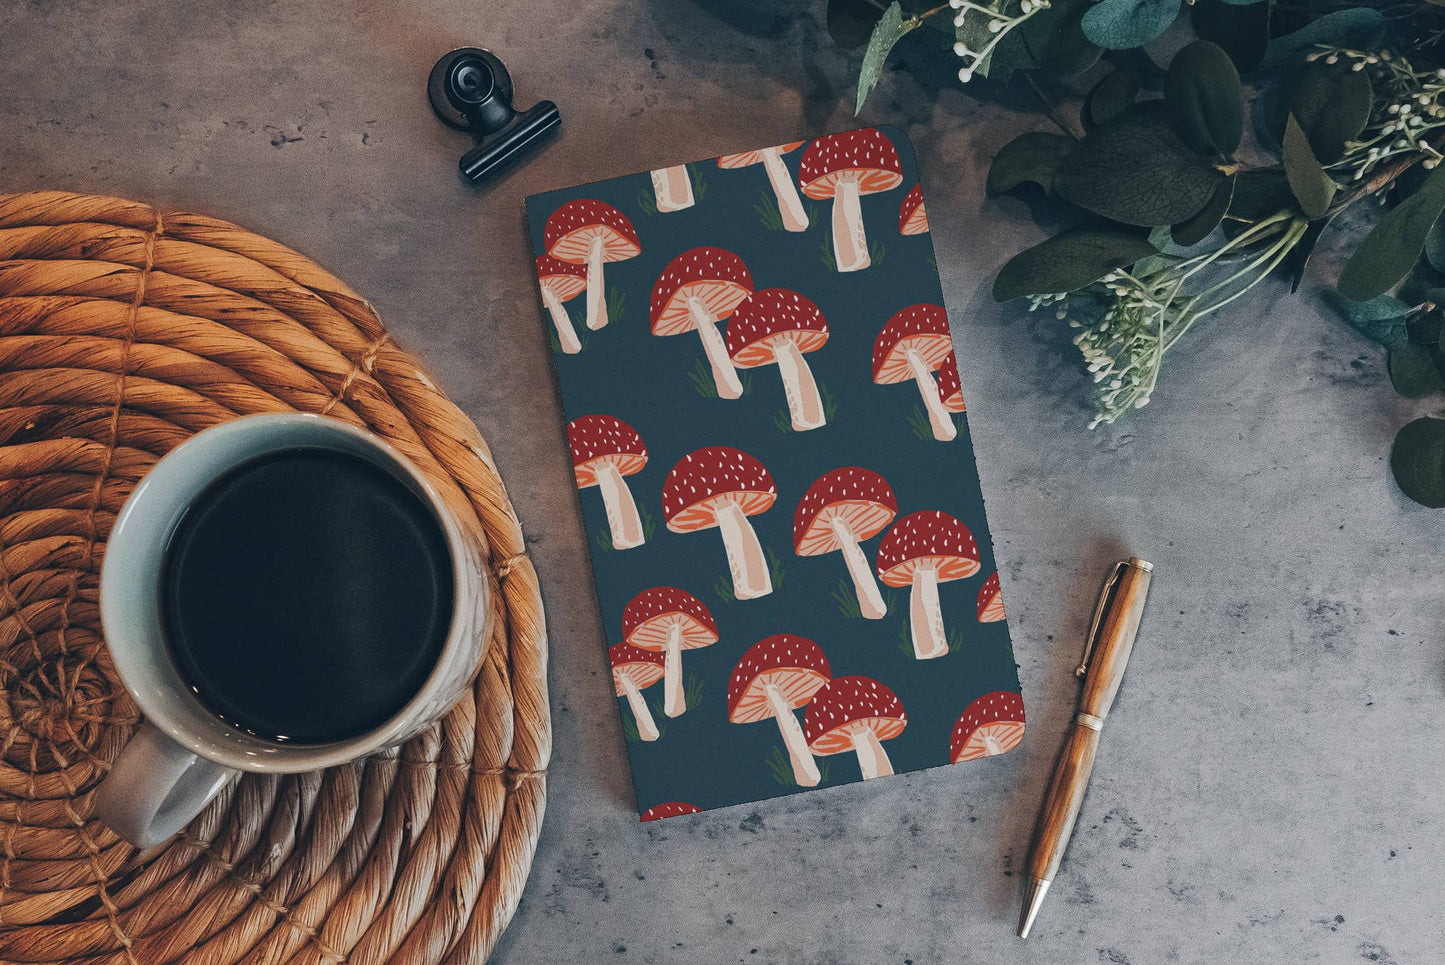 Navy Mushrooms Layflat Notebook